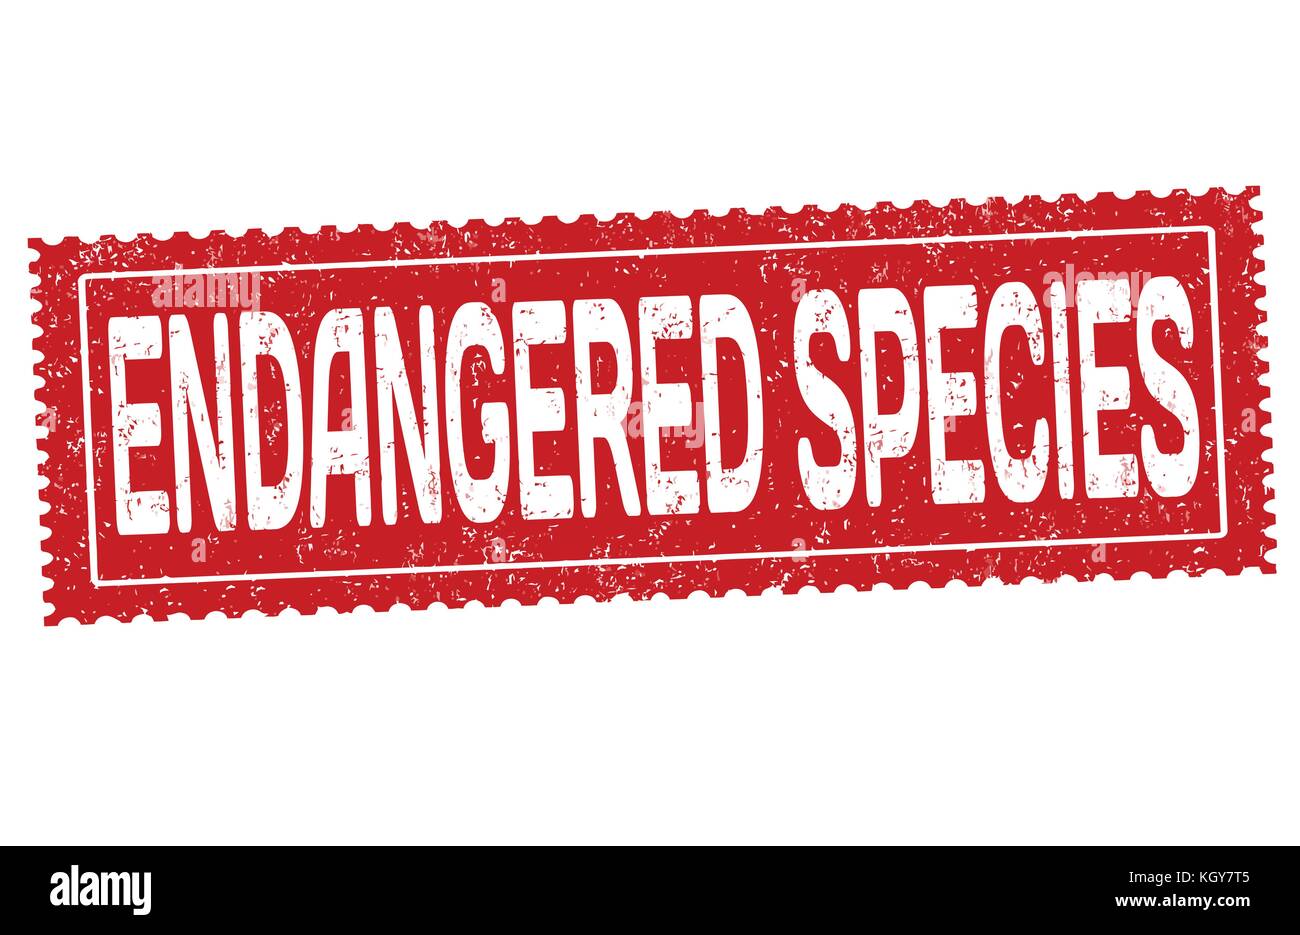 Endangered species grunge rubber stamp on white background, vector illustration Stock Vector